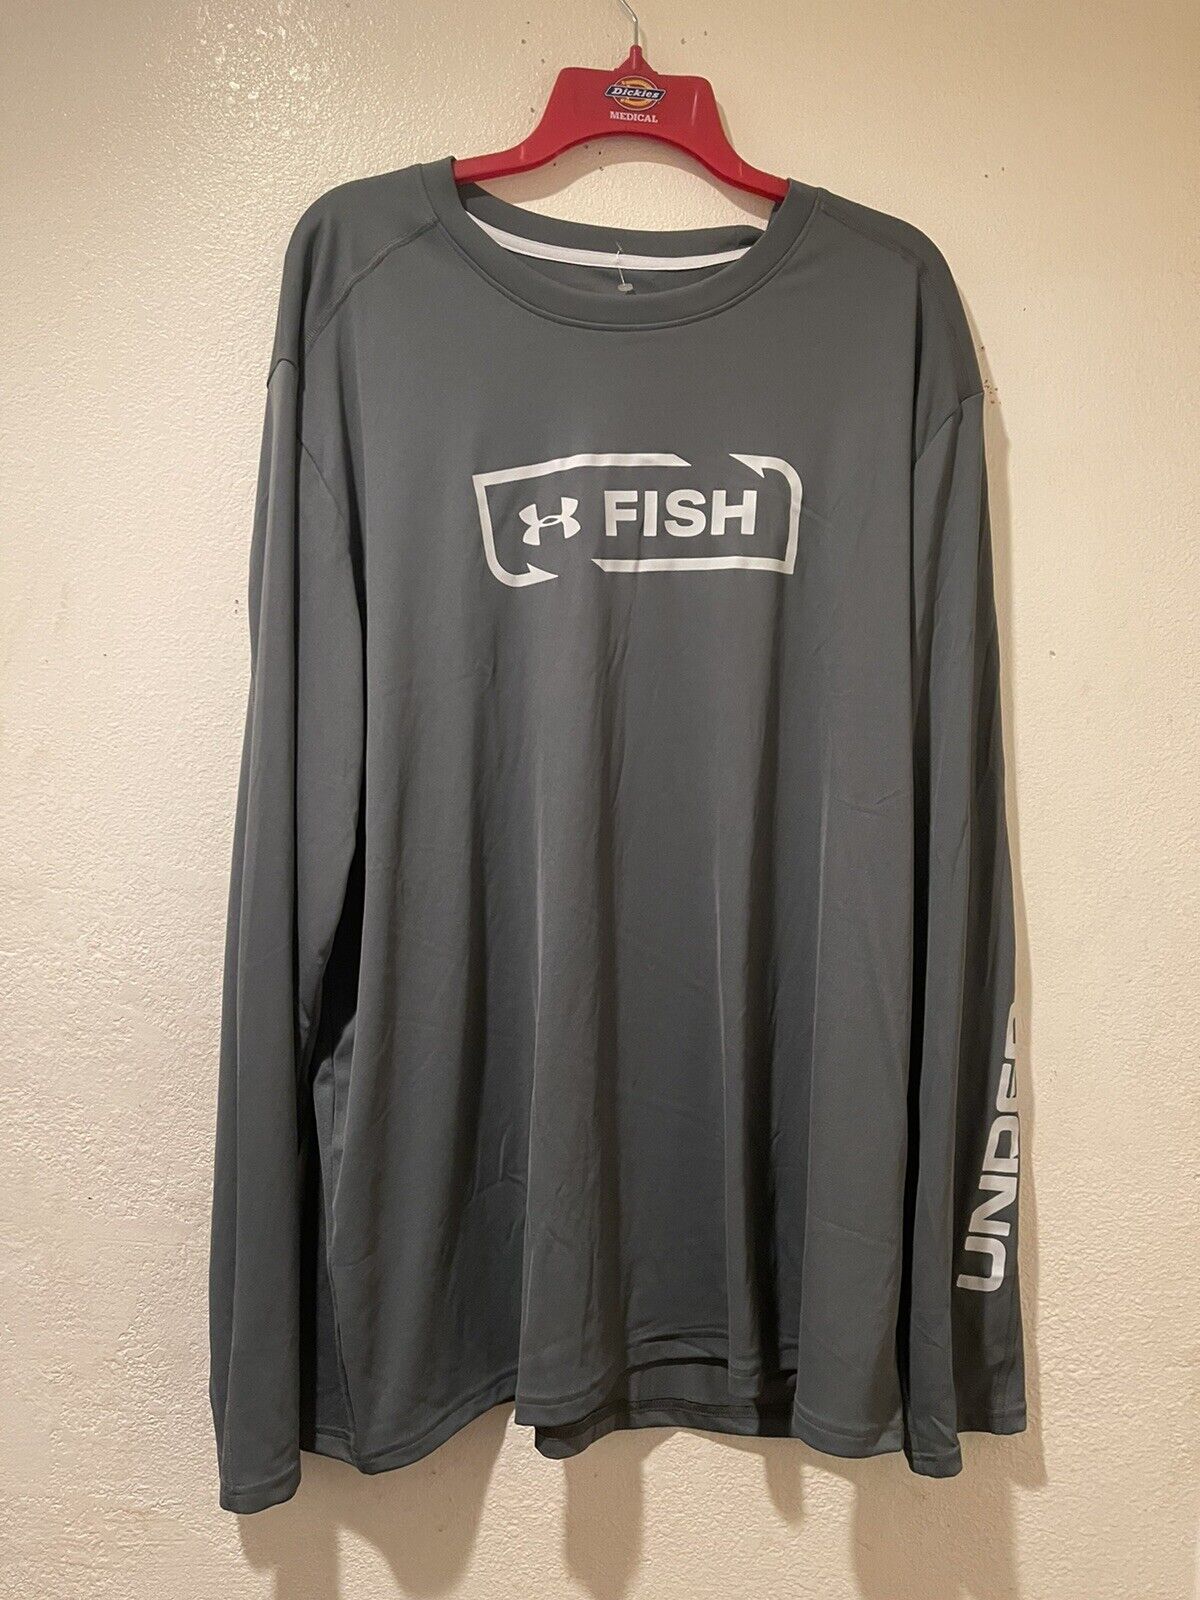 Under Armour 1344119 UA Iso-Chill Shore Break Fish Crew Tee Fishing T-Shirt 3XL